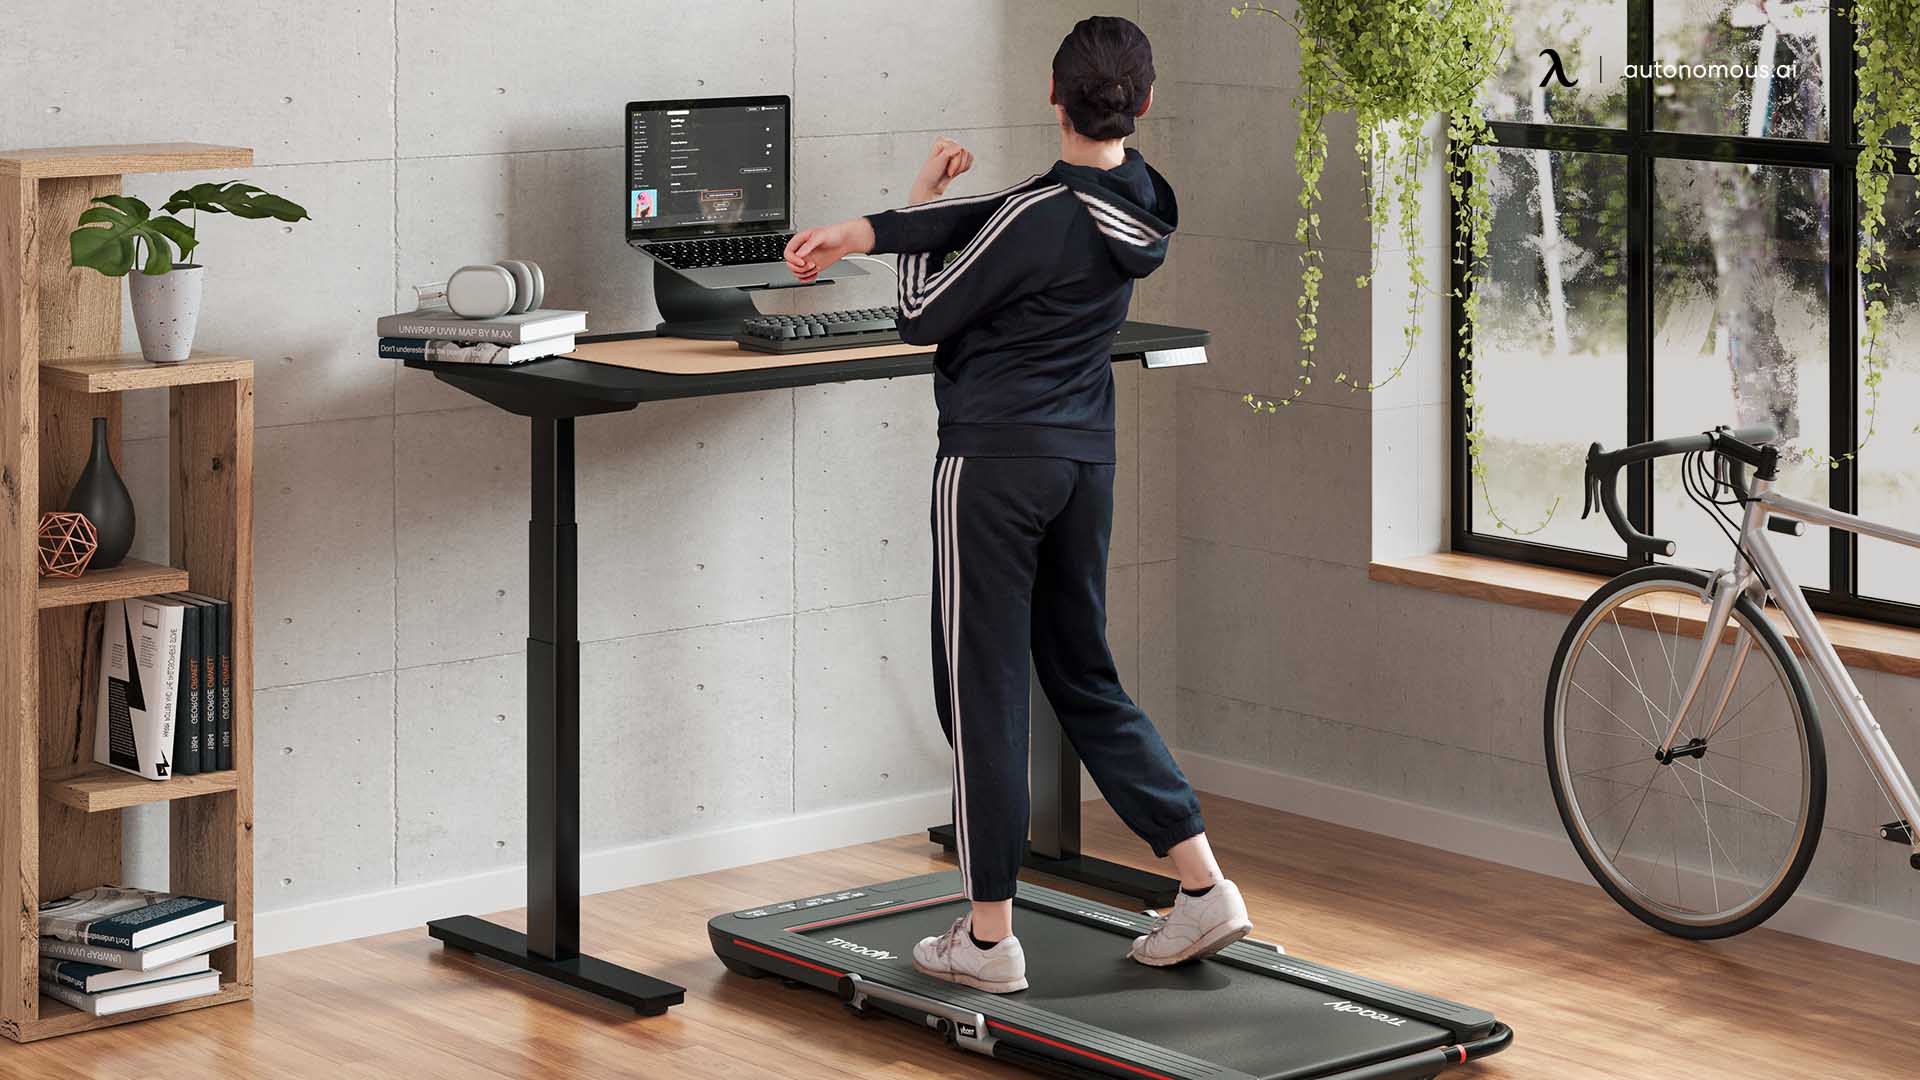 Standing Desk vs Treadmill Desk: Which One Is Better?